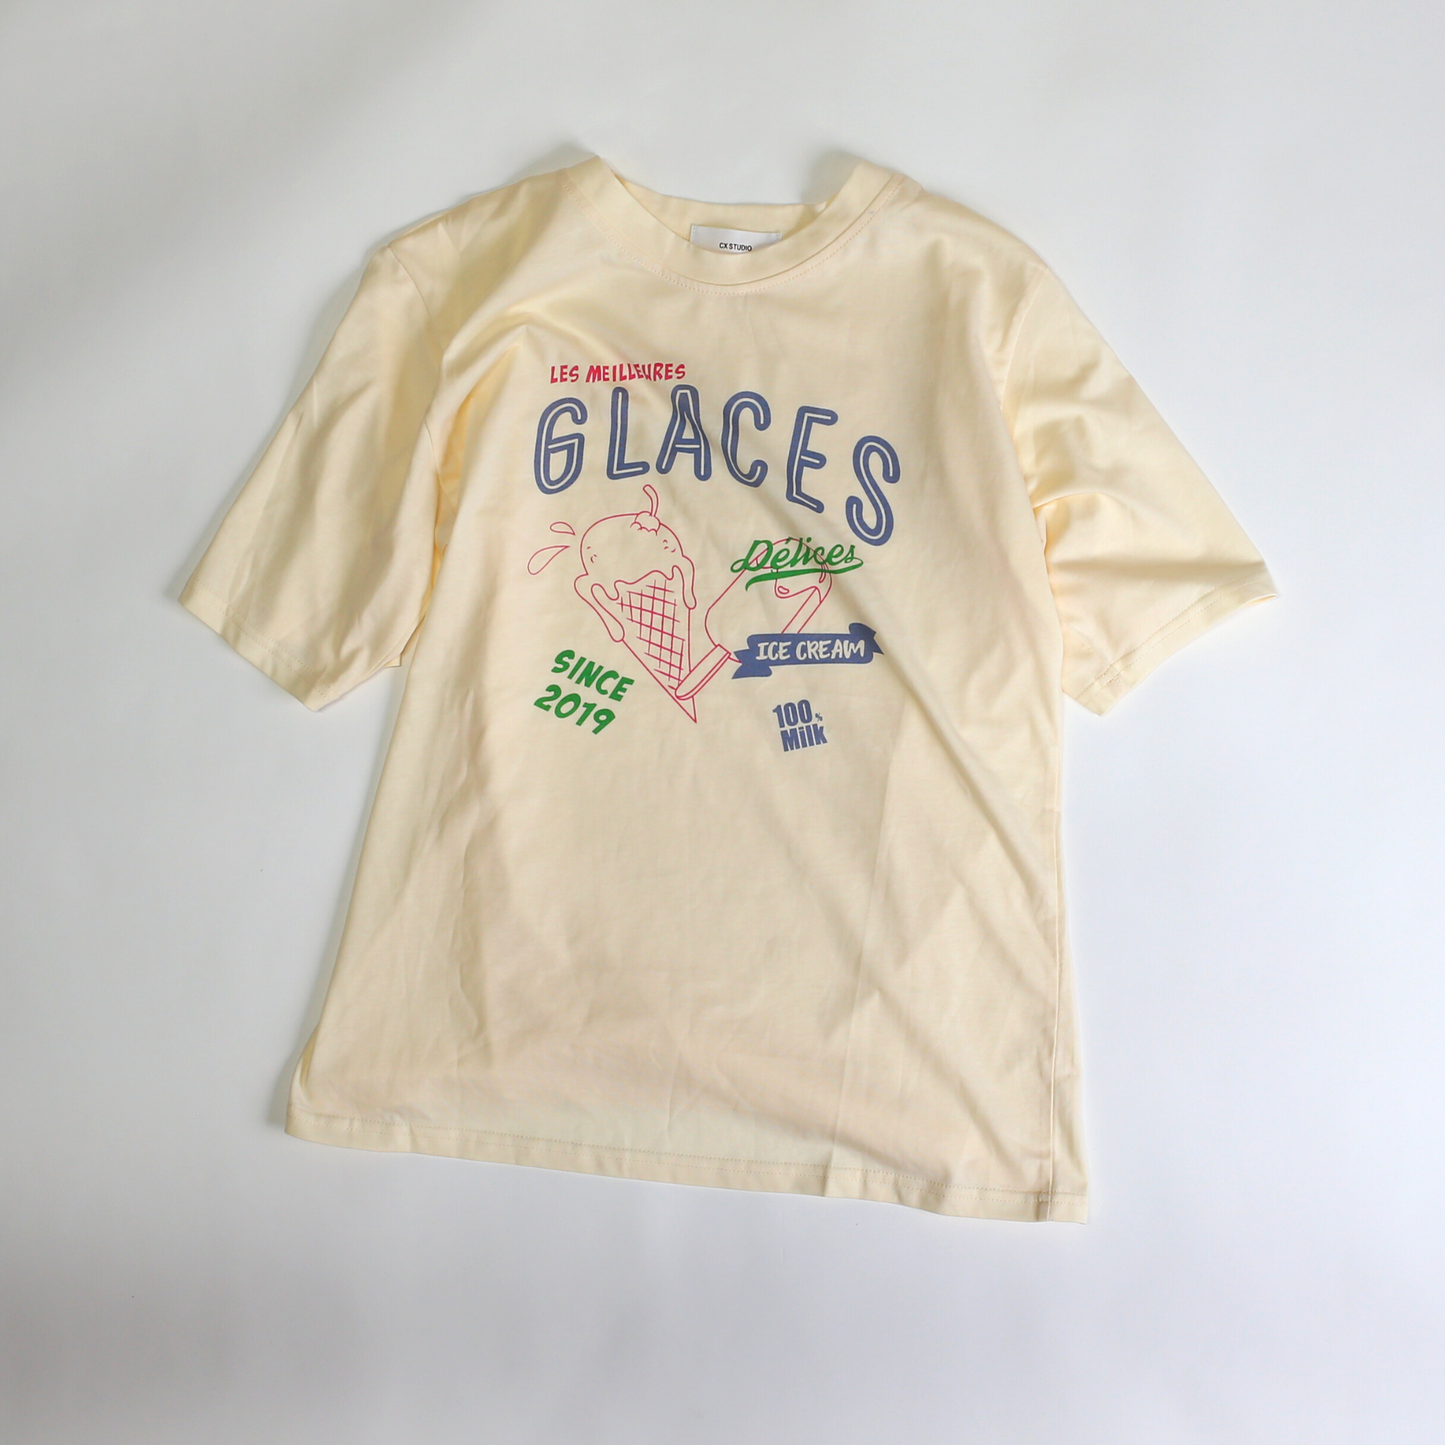 glaces アイスクリーム Tシャツ / glaces ice cream tee (レディース 服) - kids clothes shop GUZUGUZU